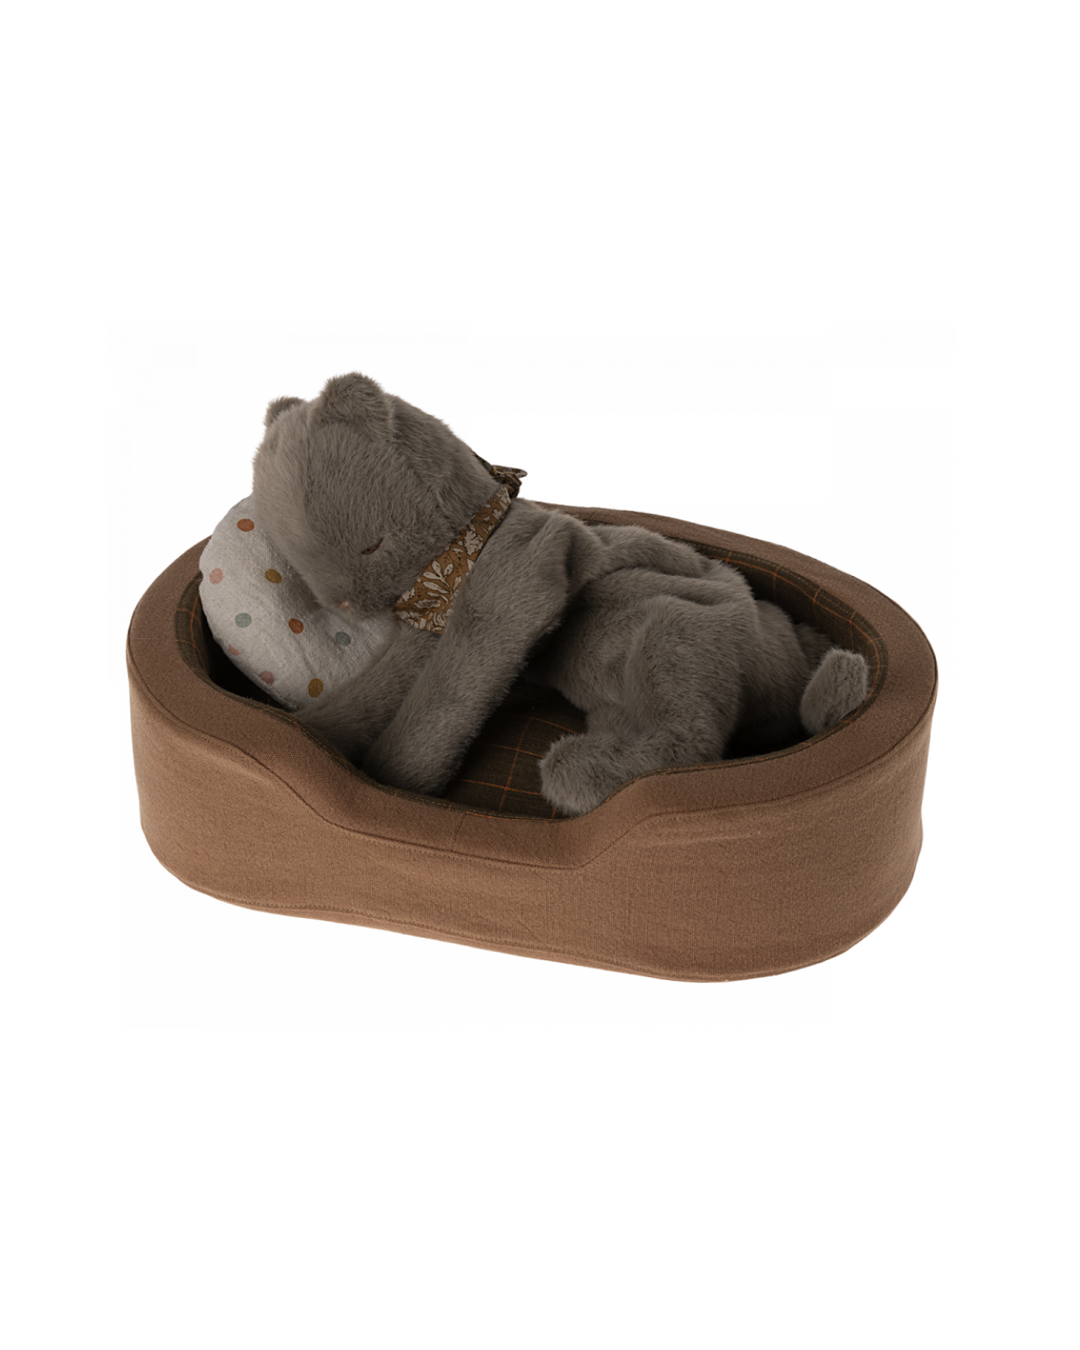 aileg Kitten Plush - Earth Grey: Delightful Soft Toy